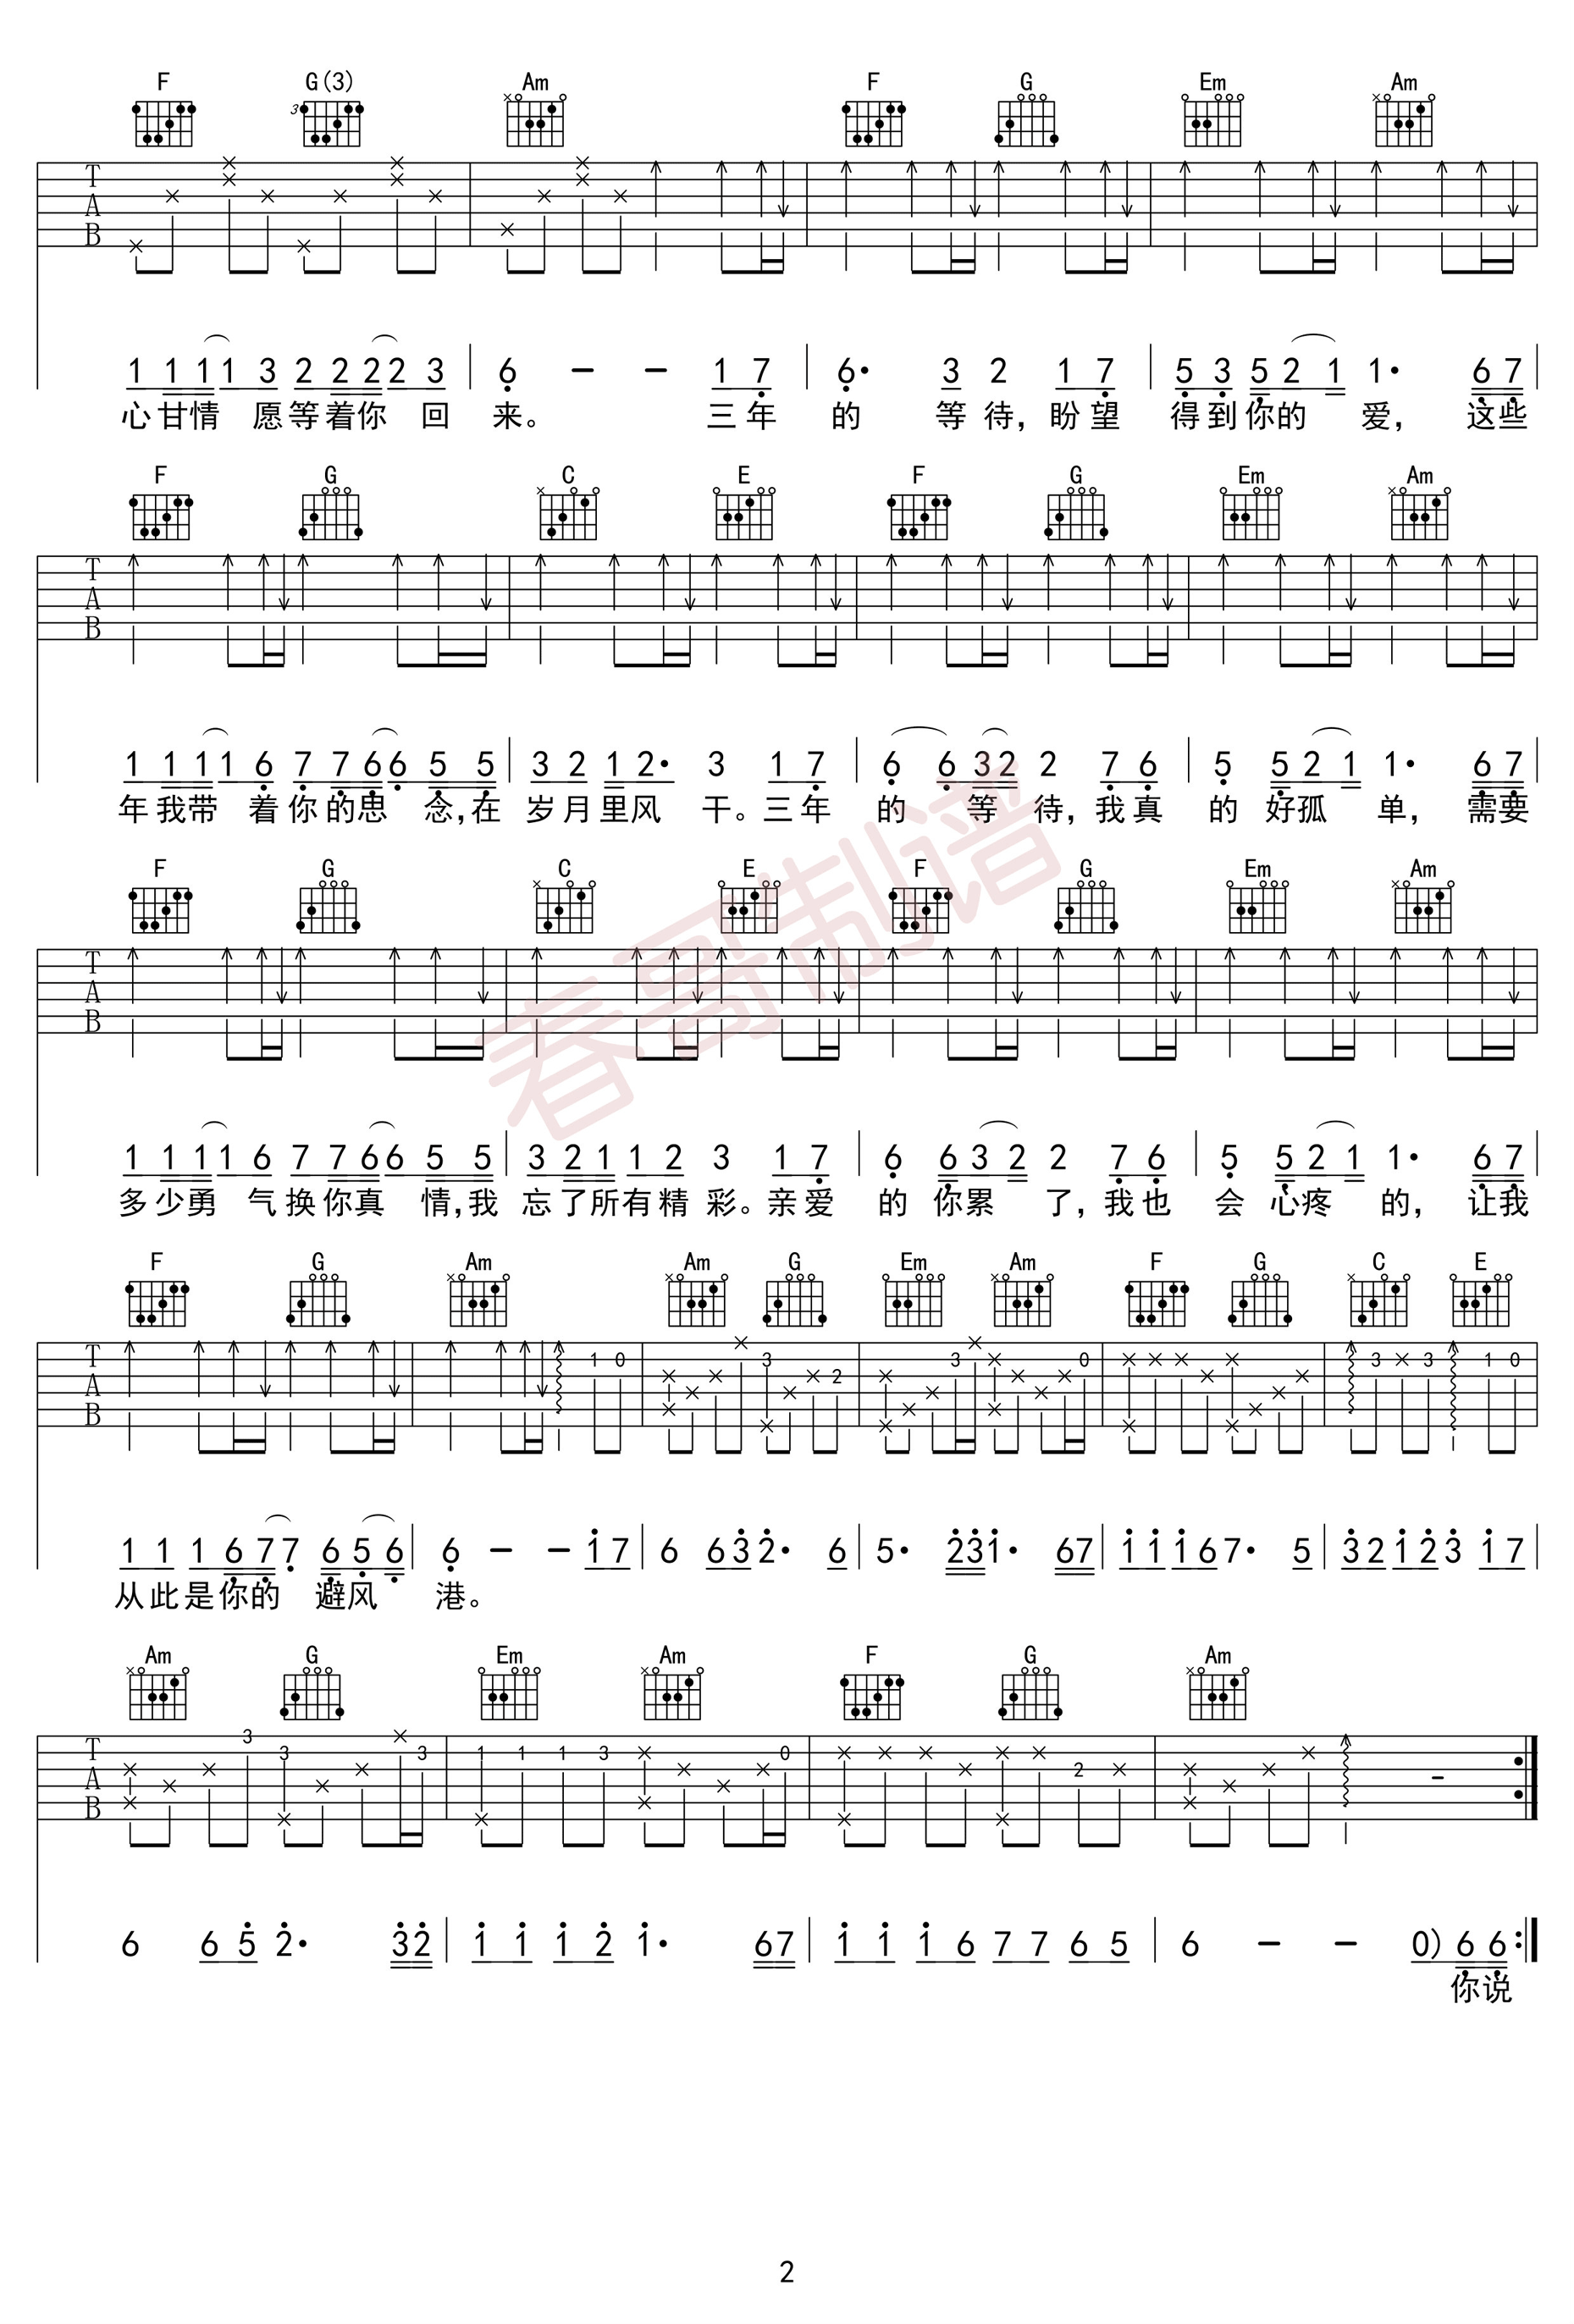 乐者《三年》吉他谱-Guitar Music Score